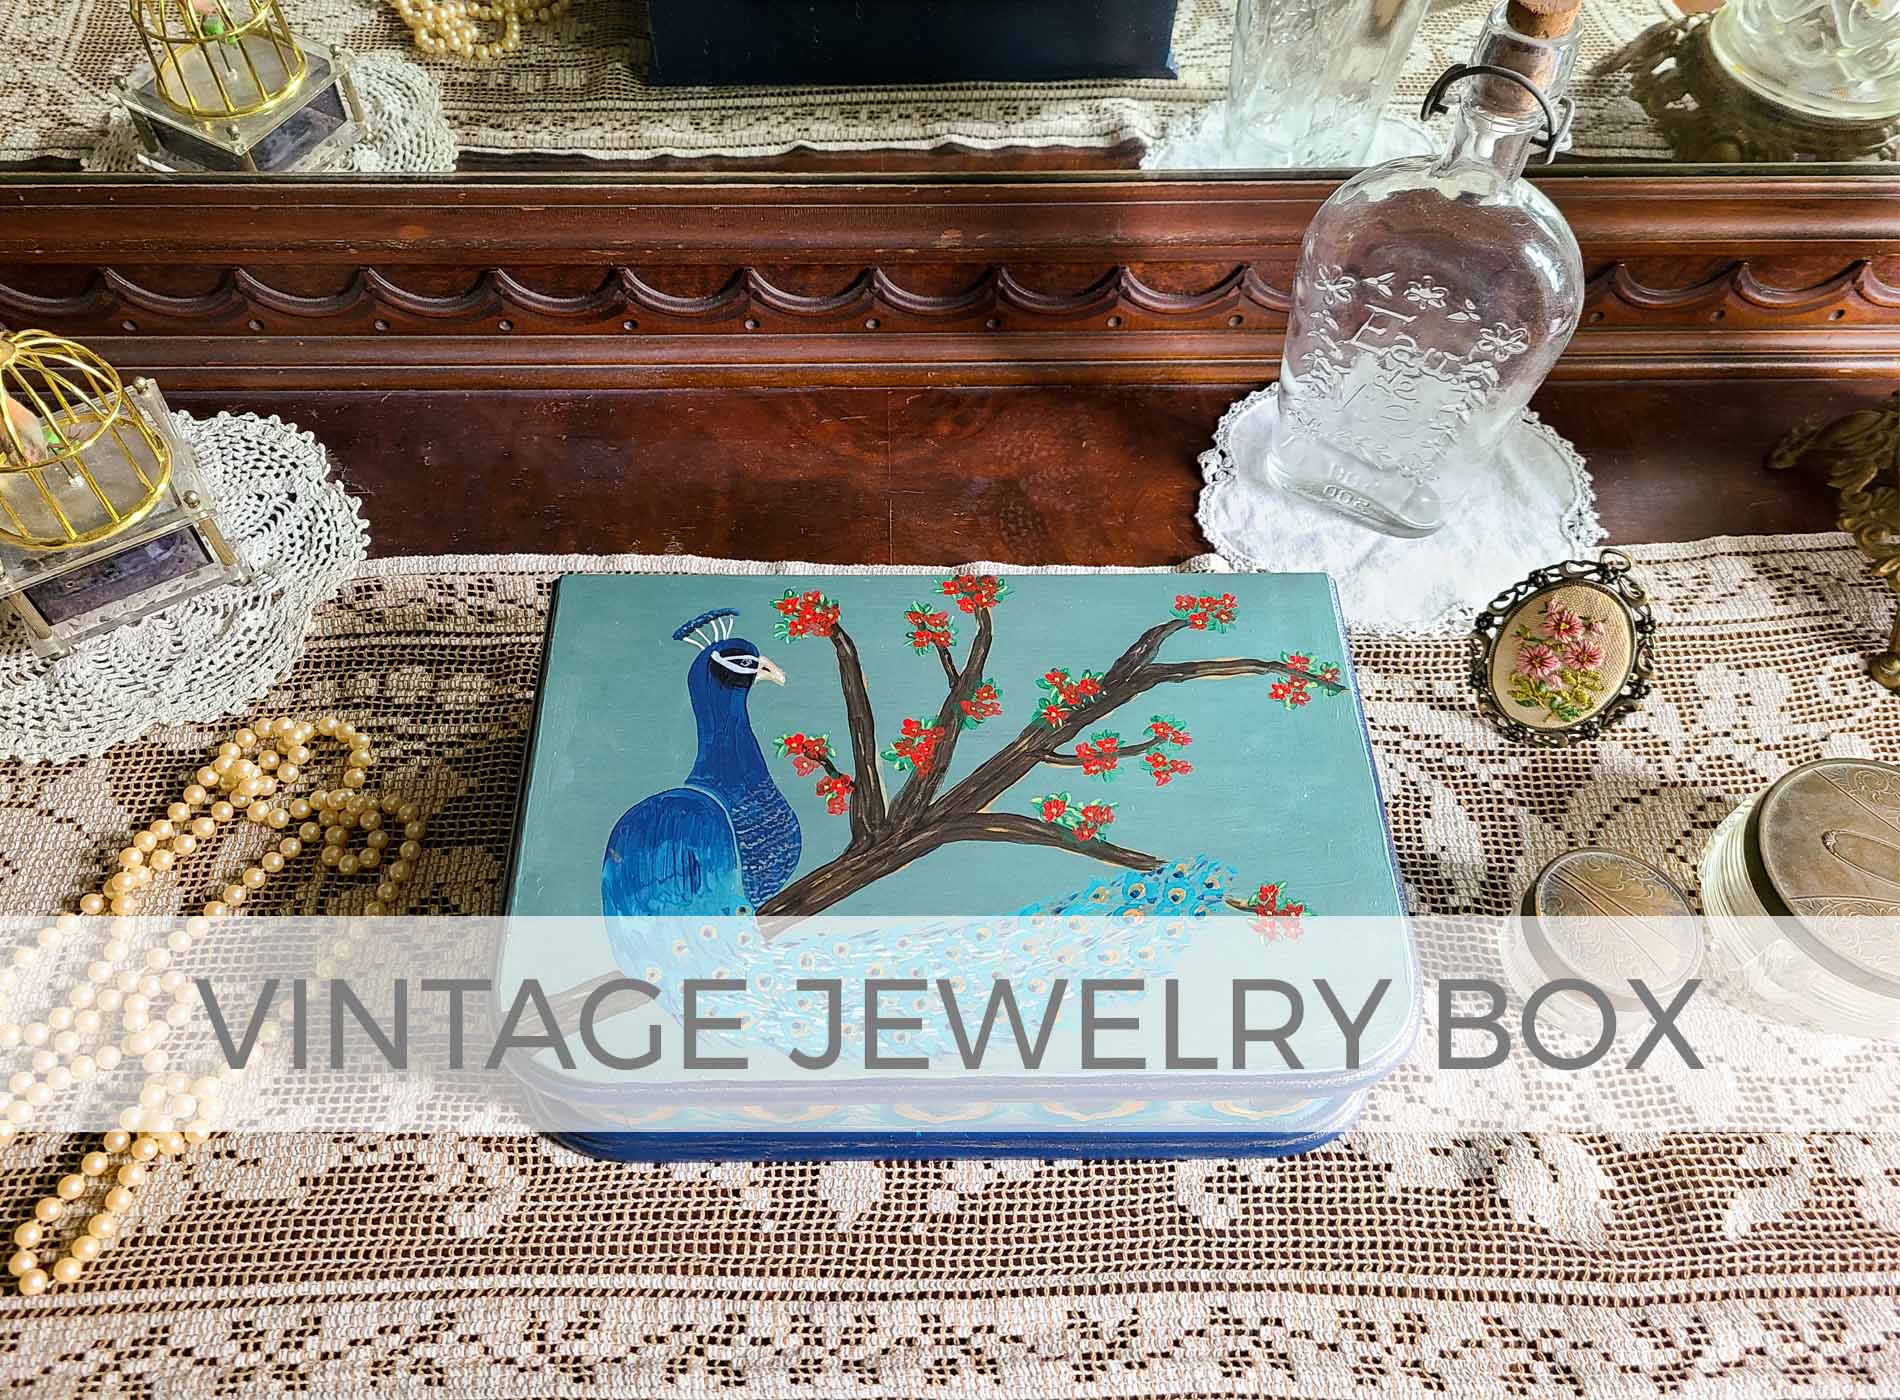 Vintage Jewelry Box by Larissa of Prodigal Pieces | prodigalpieces.com #prodigalpieces